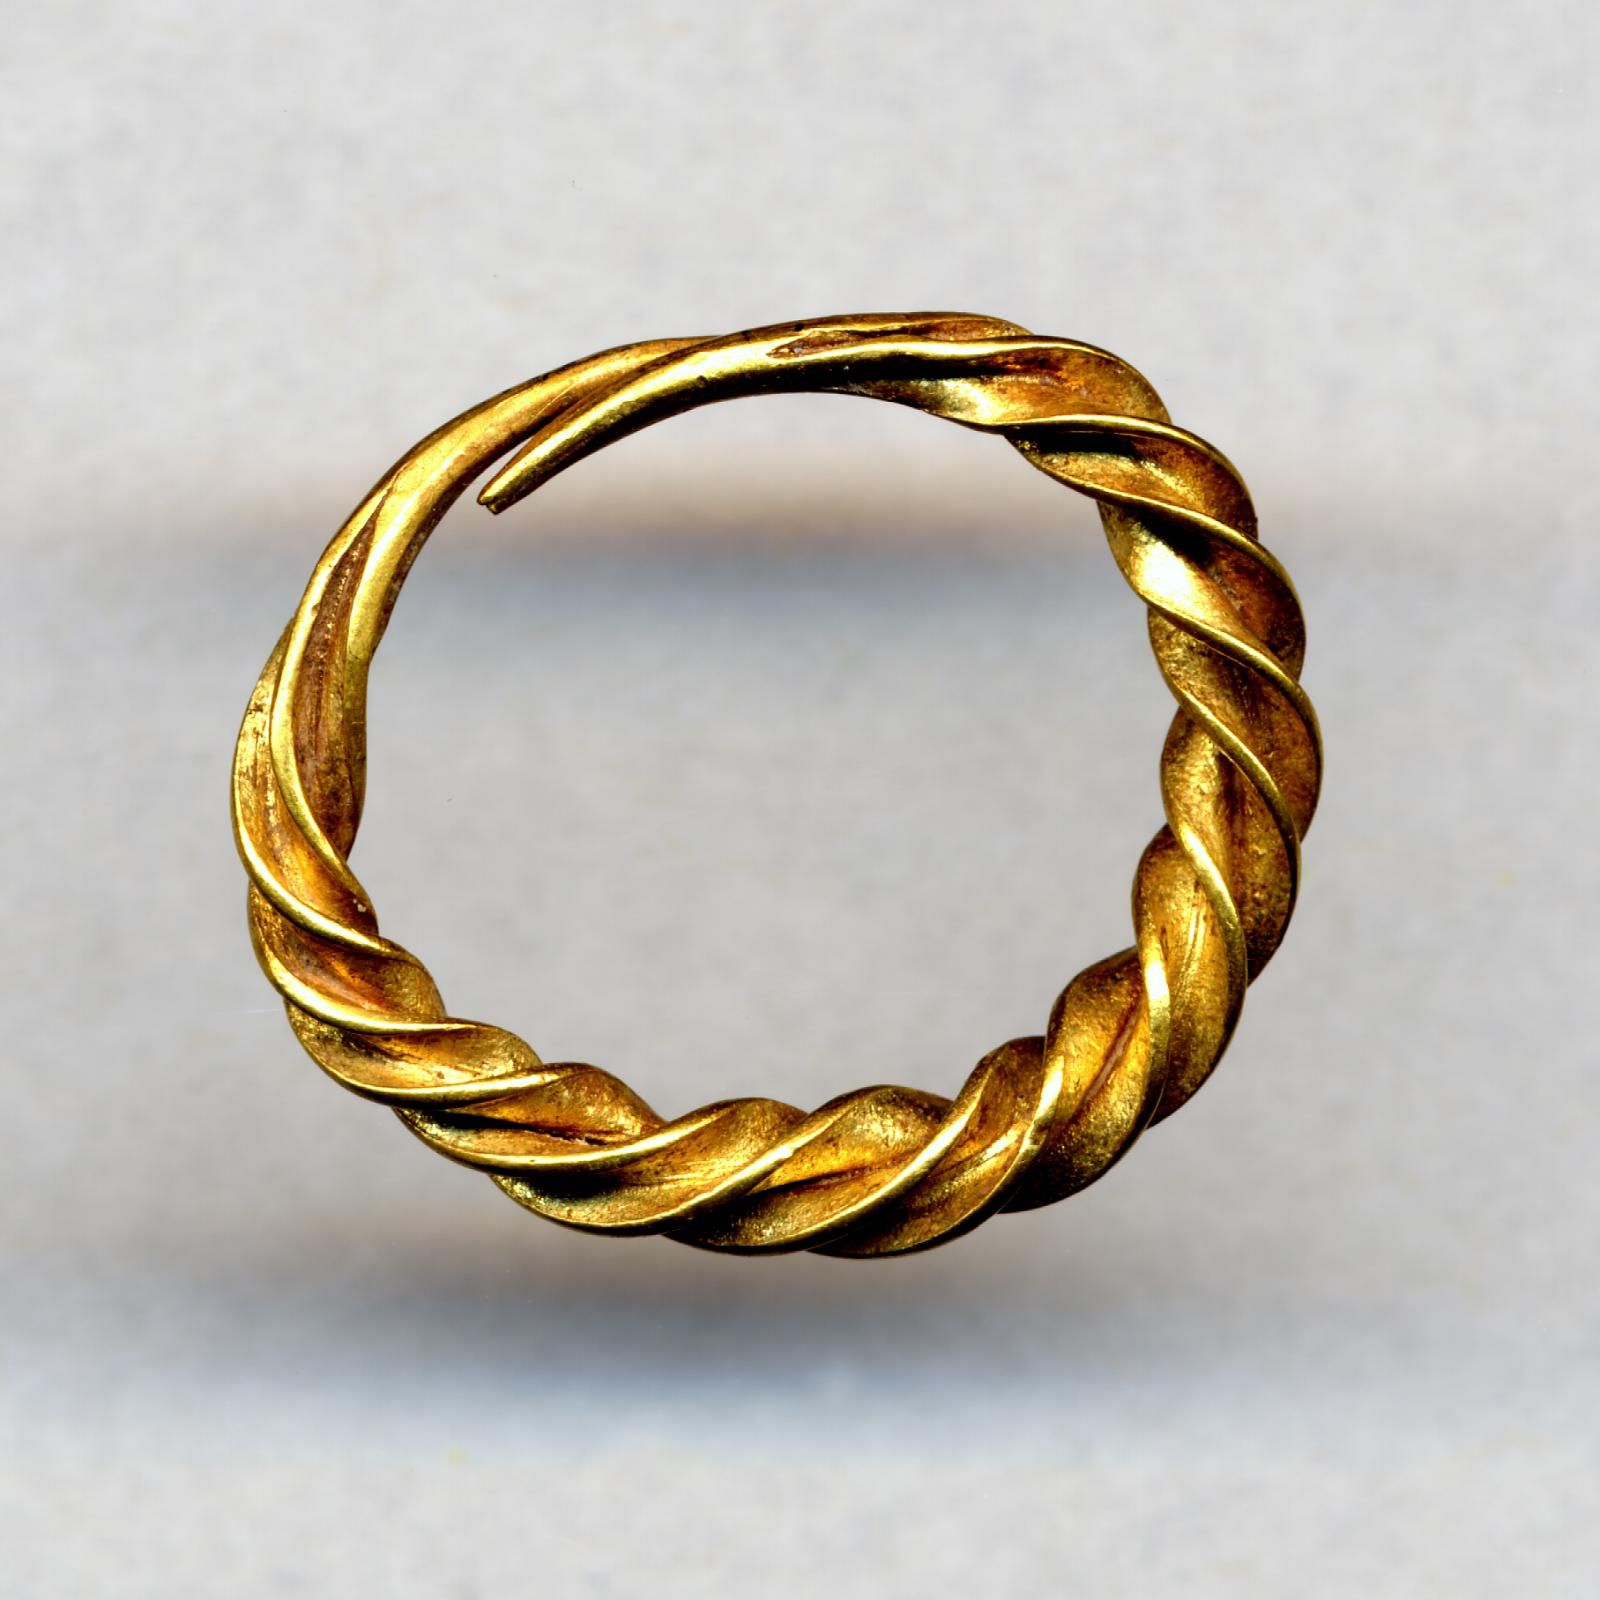 Bronze-Age Ring British Museum